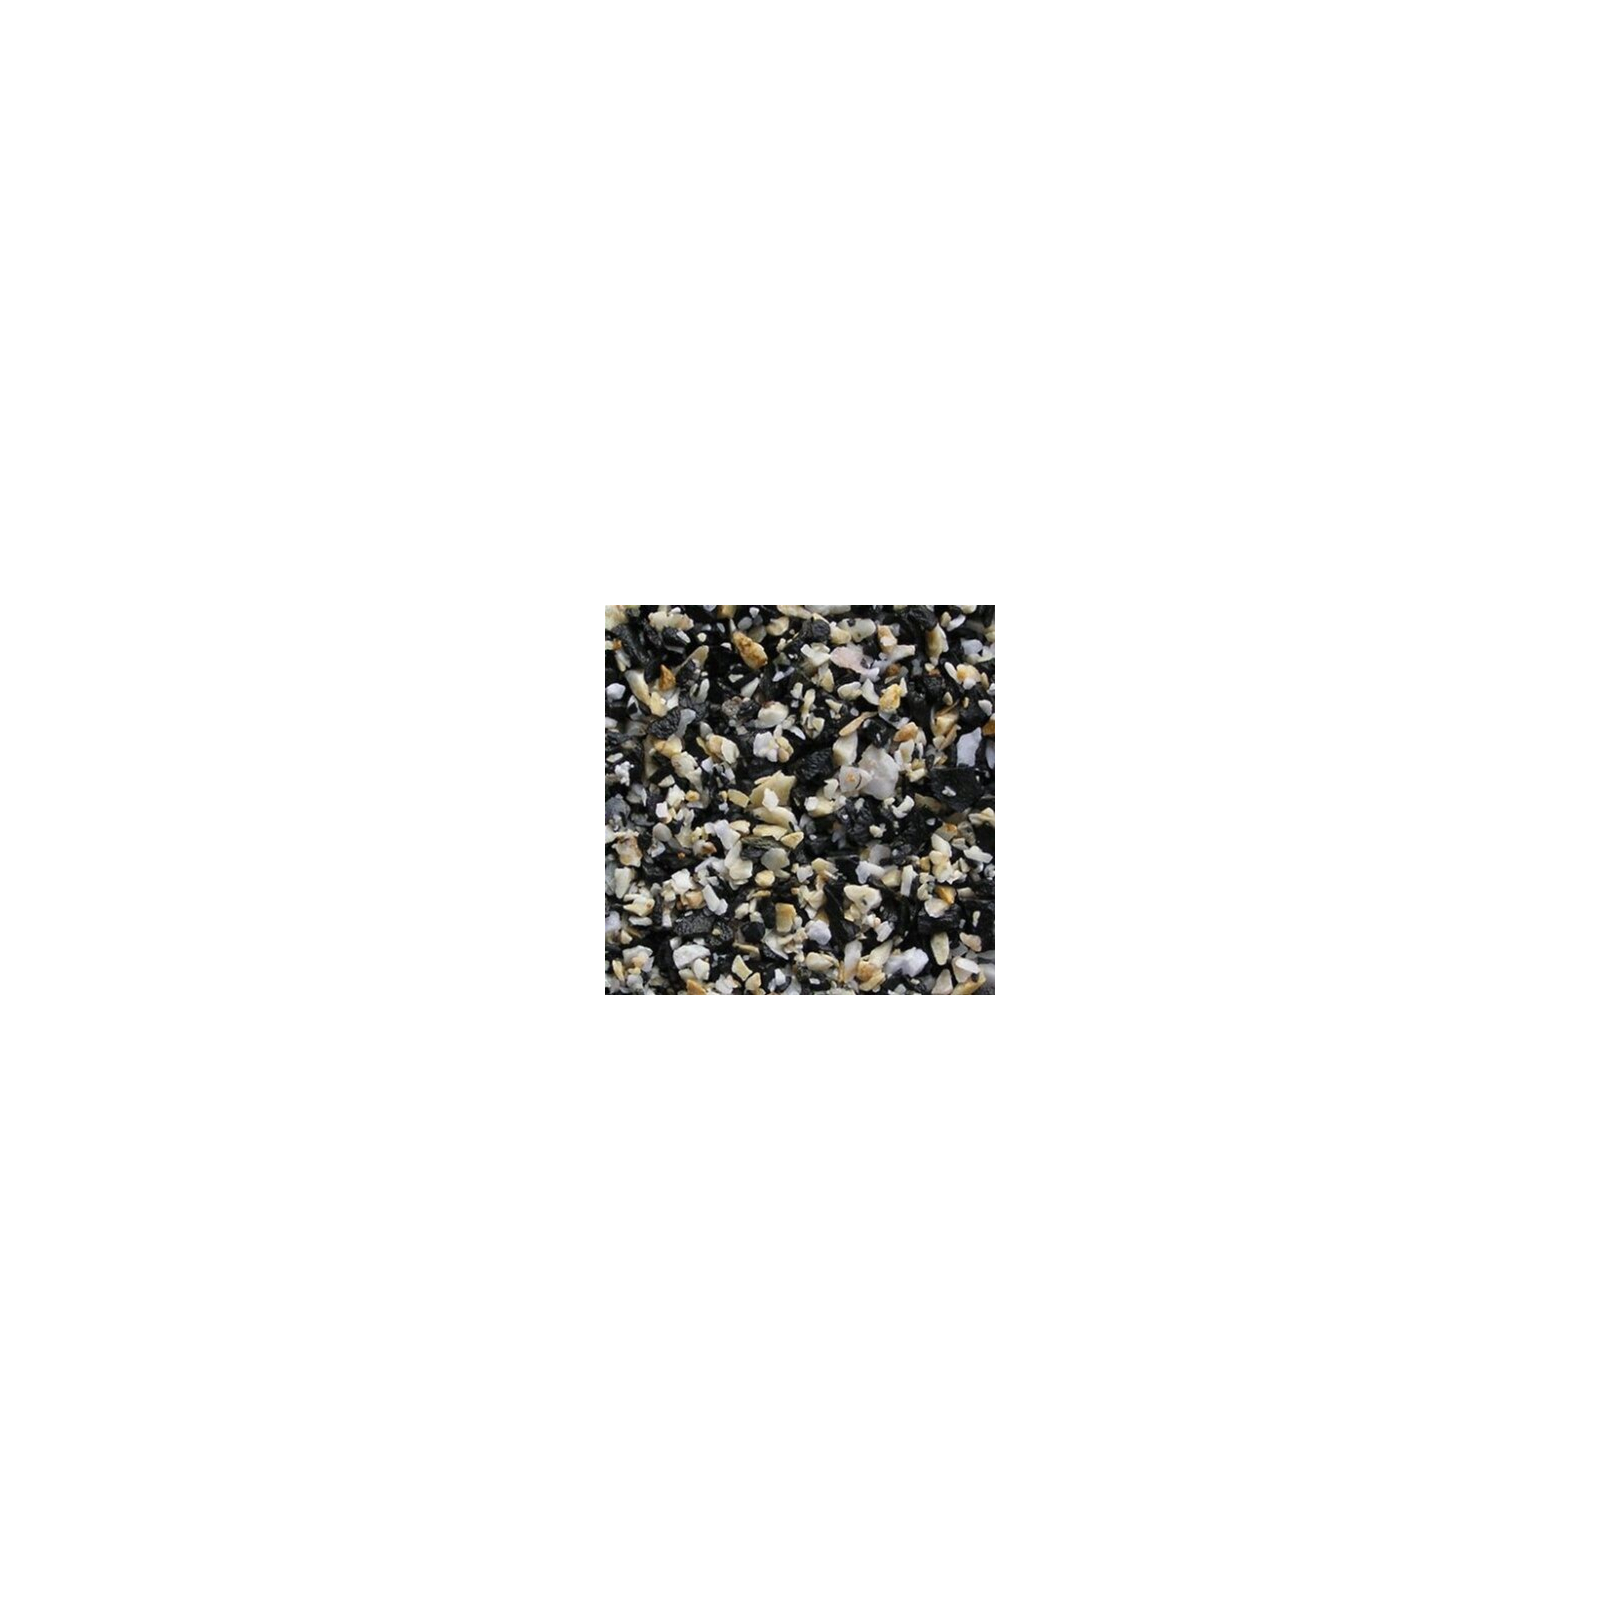 Грунт для аквариума Nechay Zoo черно-белый 10 кг (2-5 мм) (2717250009360)